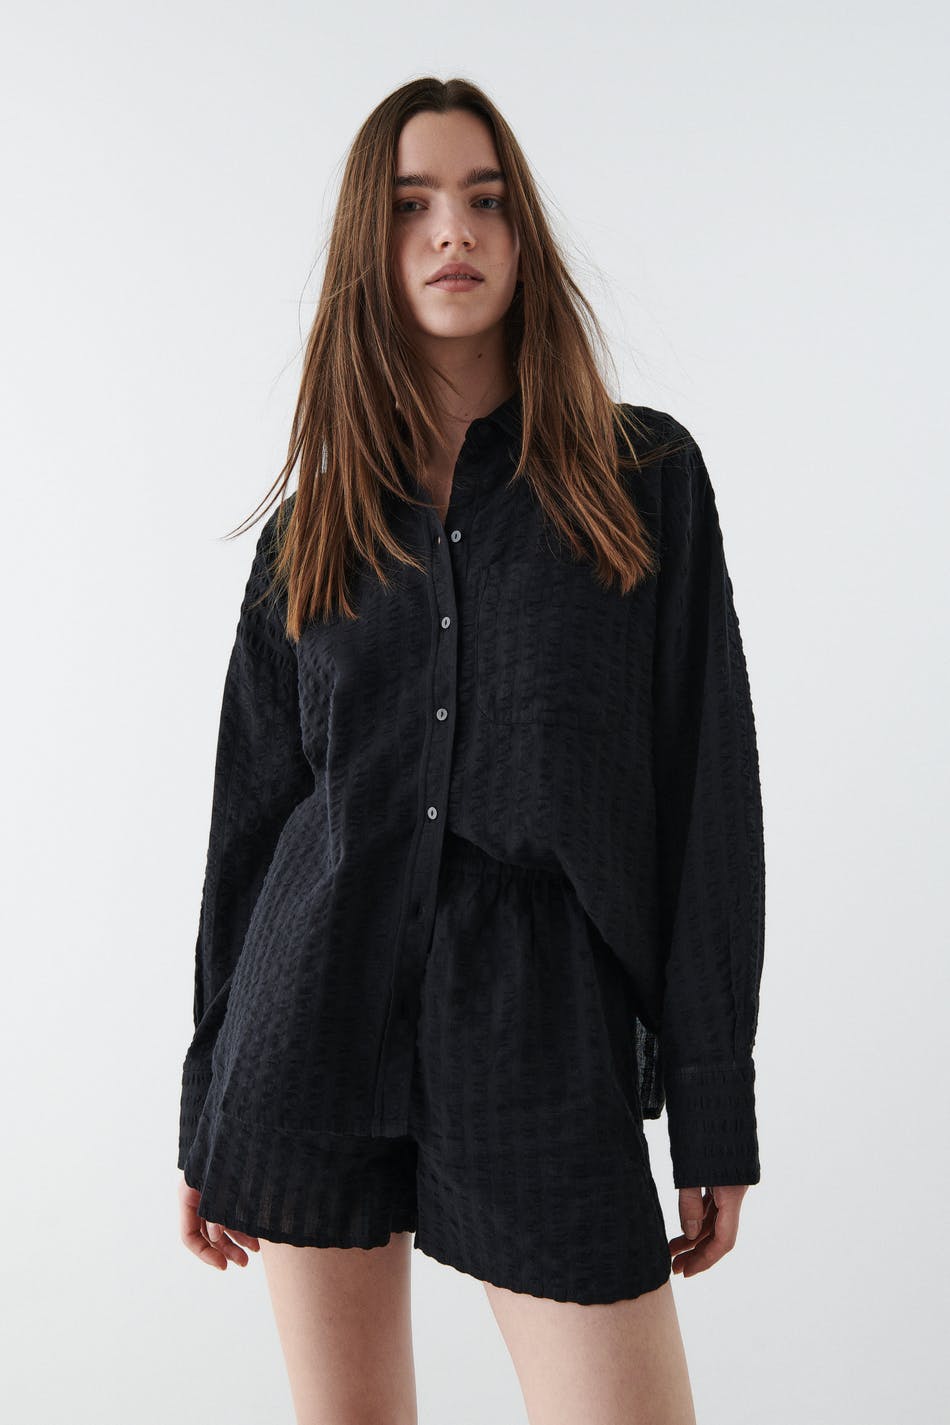 Gina Tricot Amanda pyjamas shorts S  Black (9000)